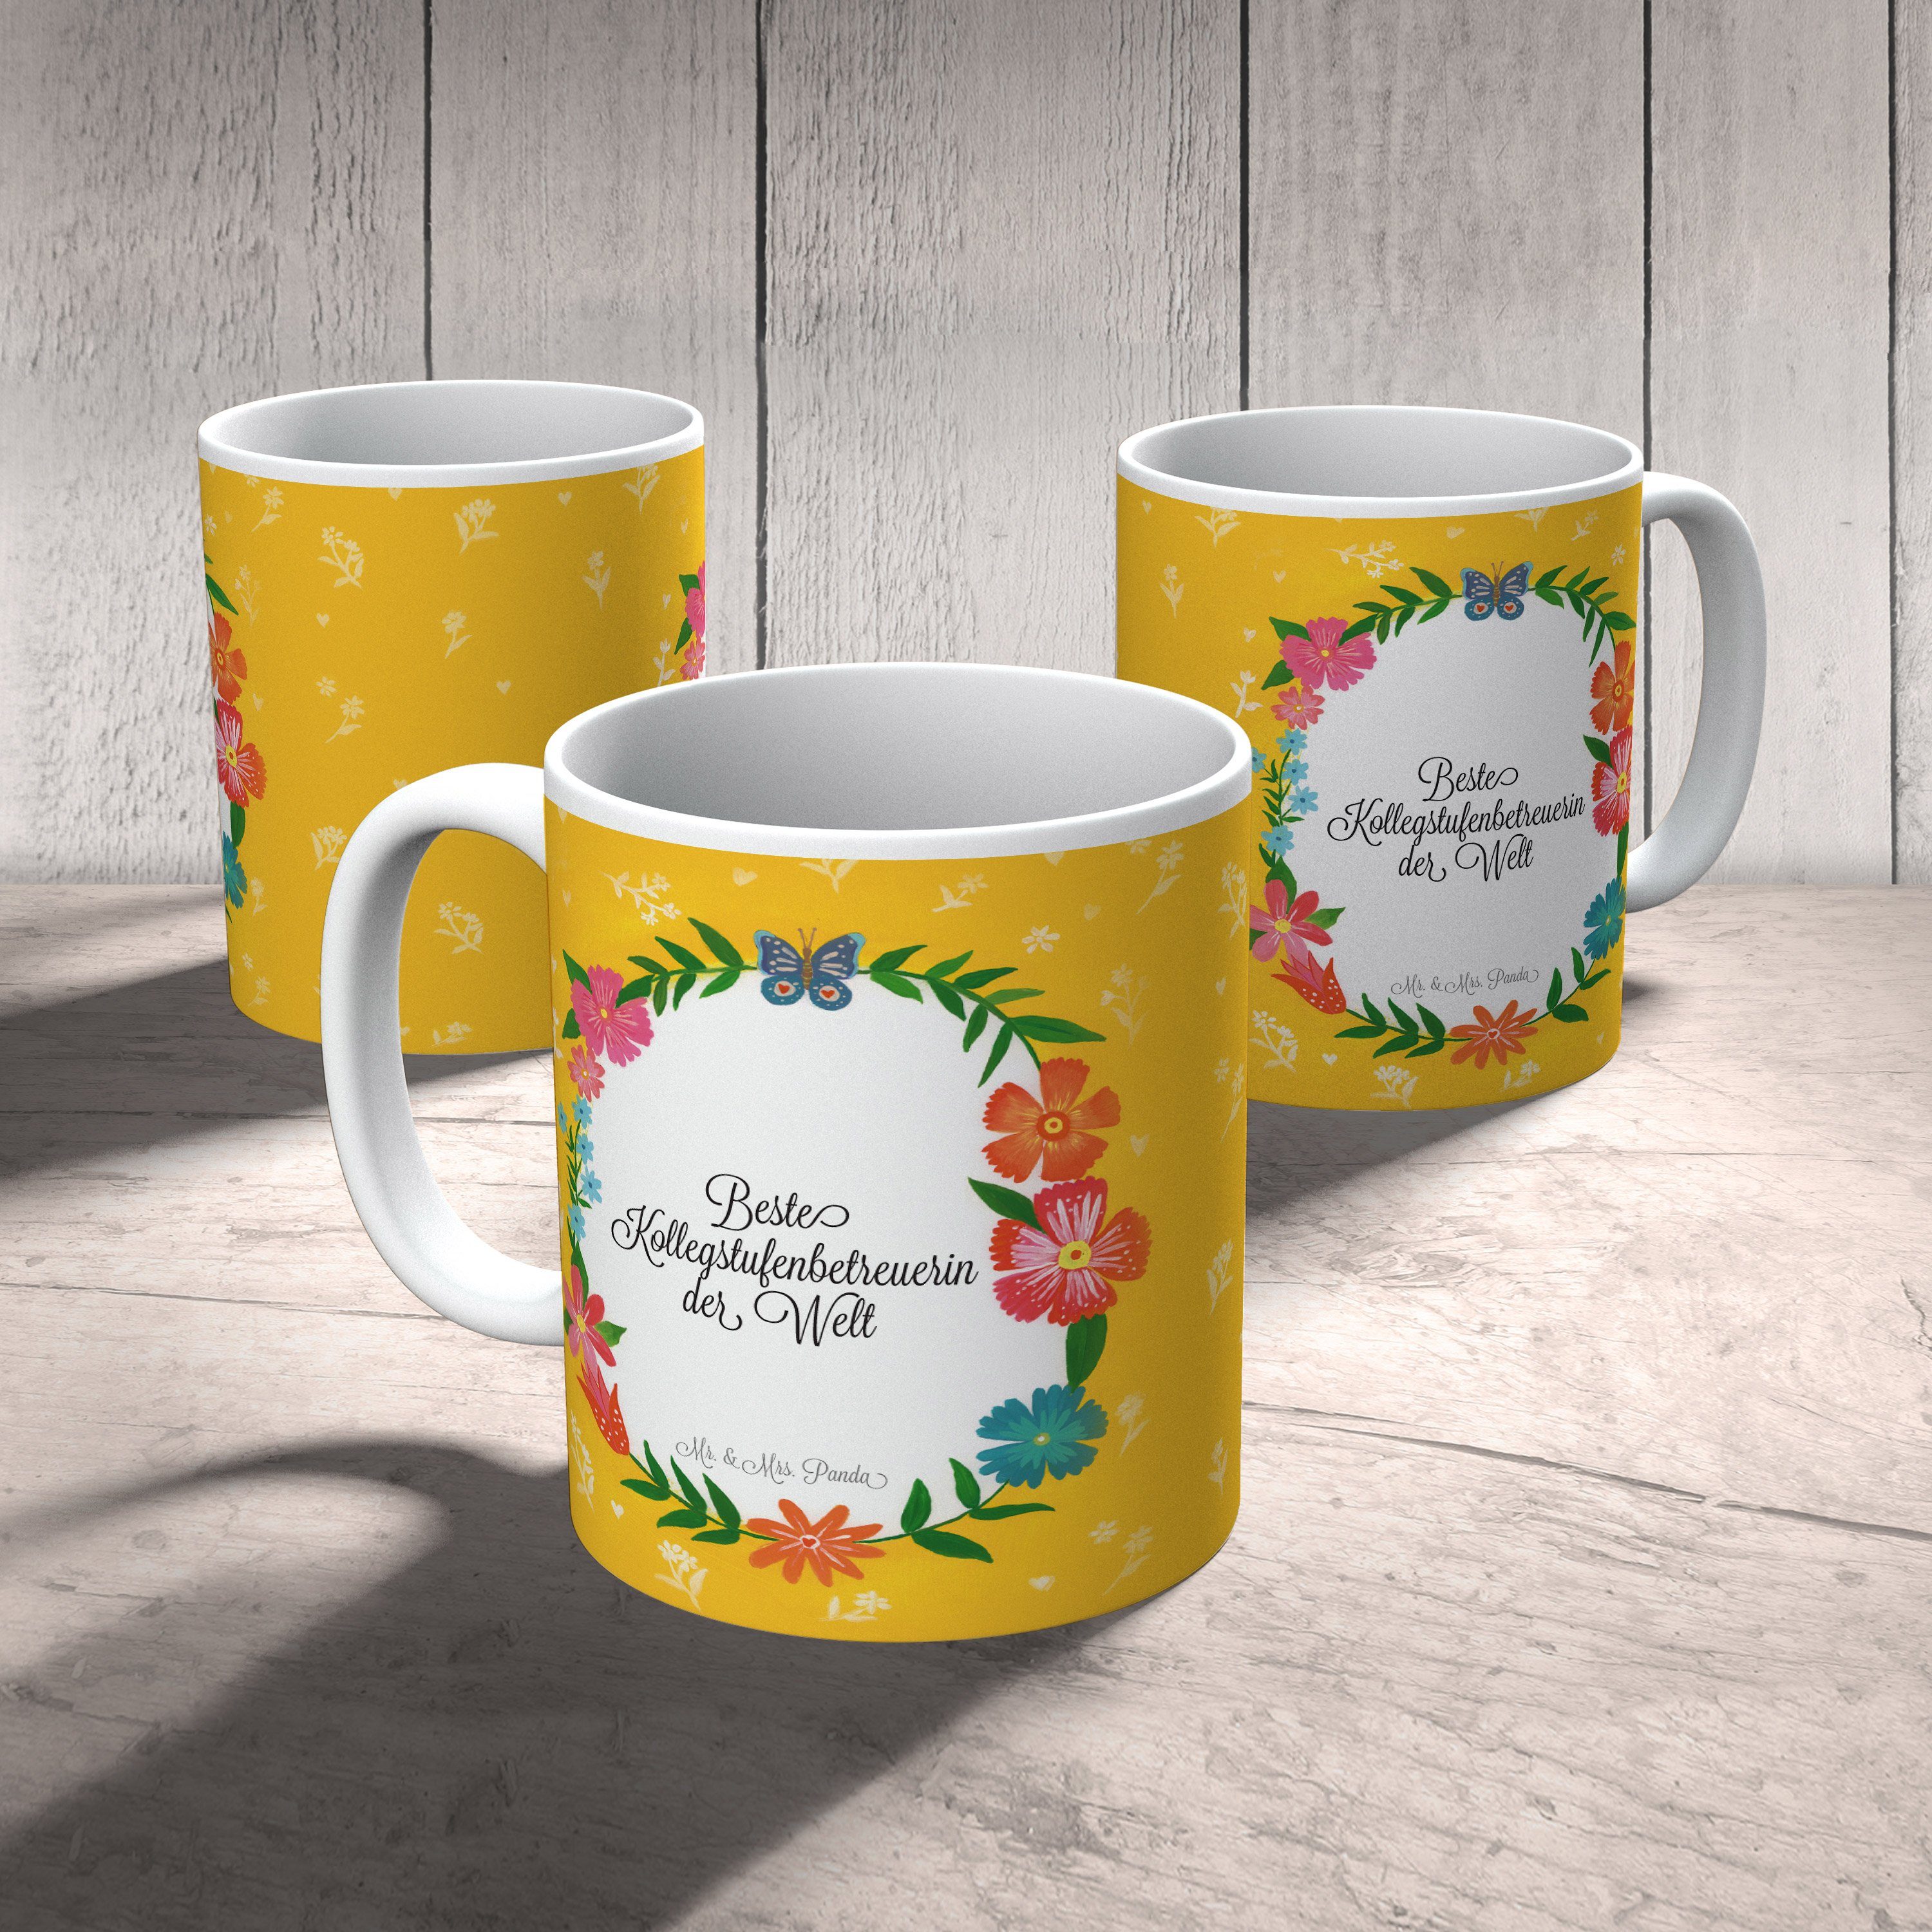 Mr. & Mrs. Panda Sc, Berufsausbildung, - Kollegstufenbetreuerin Kaffeebecher, Tasse Keramik Geschenk